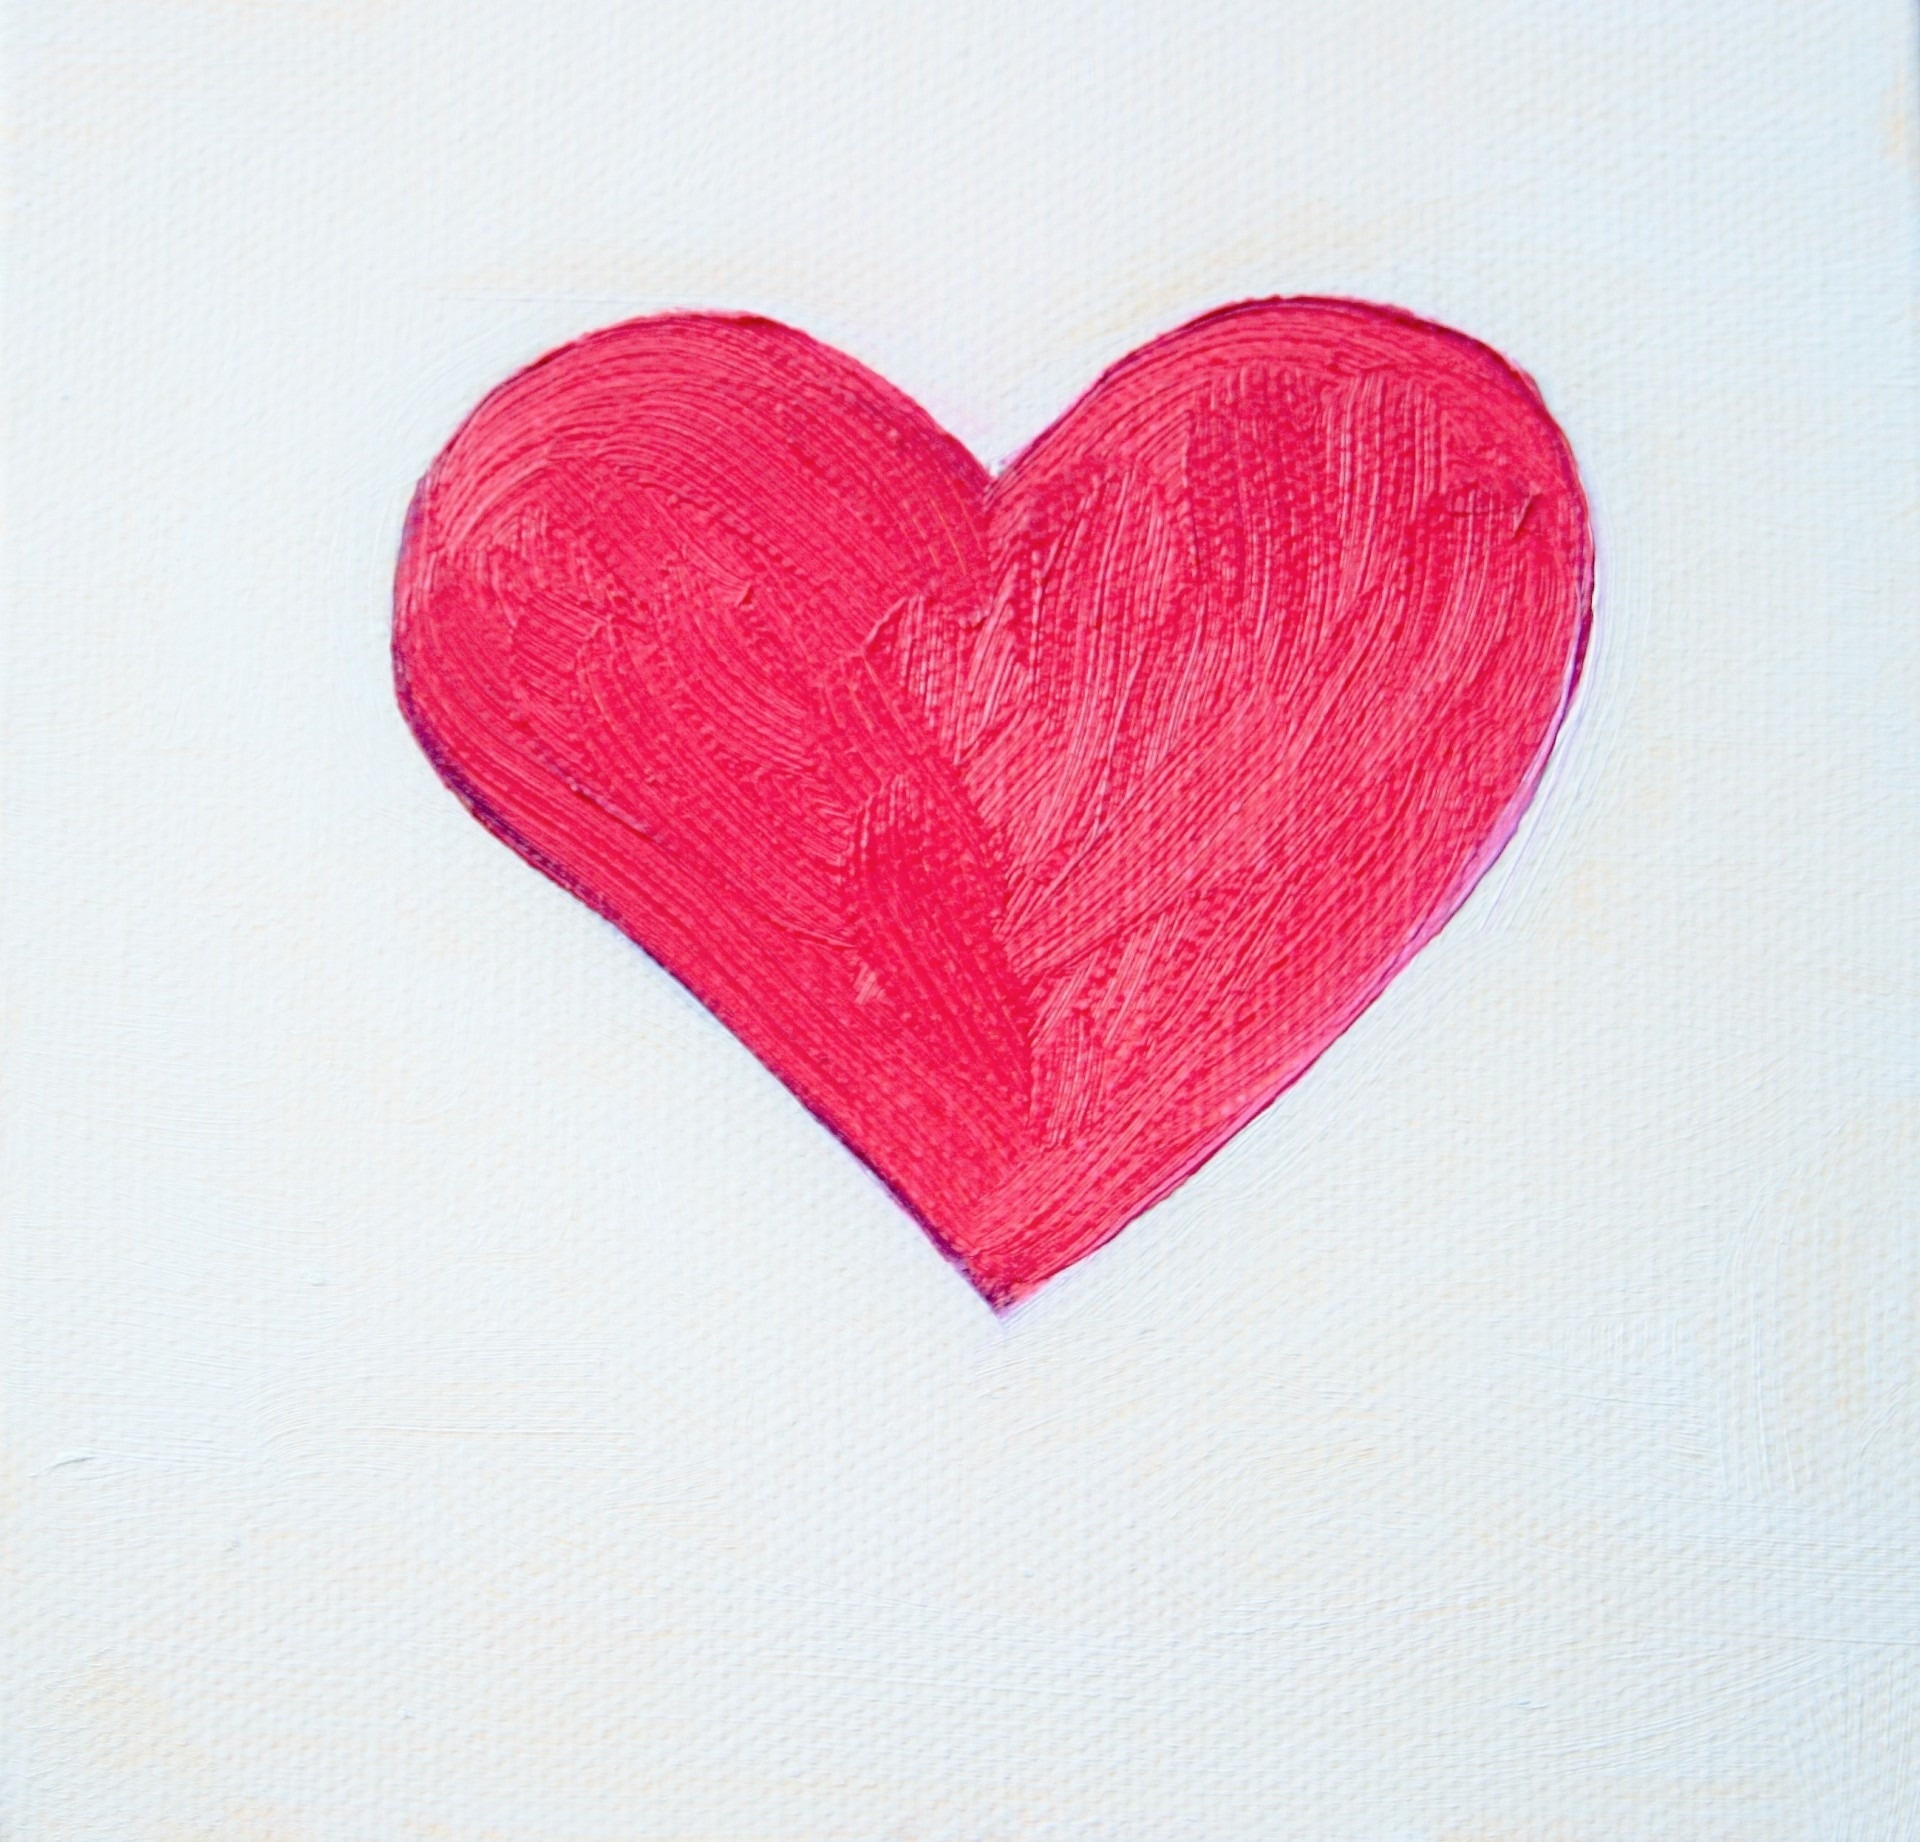 Human heart sketch liner stock vector. Illustration of design - 109688936